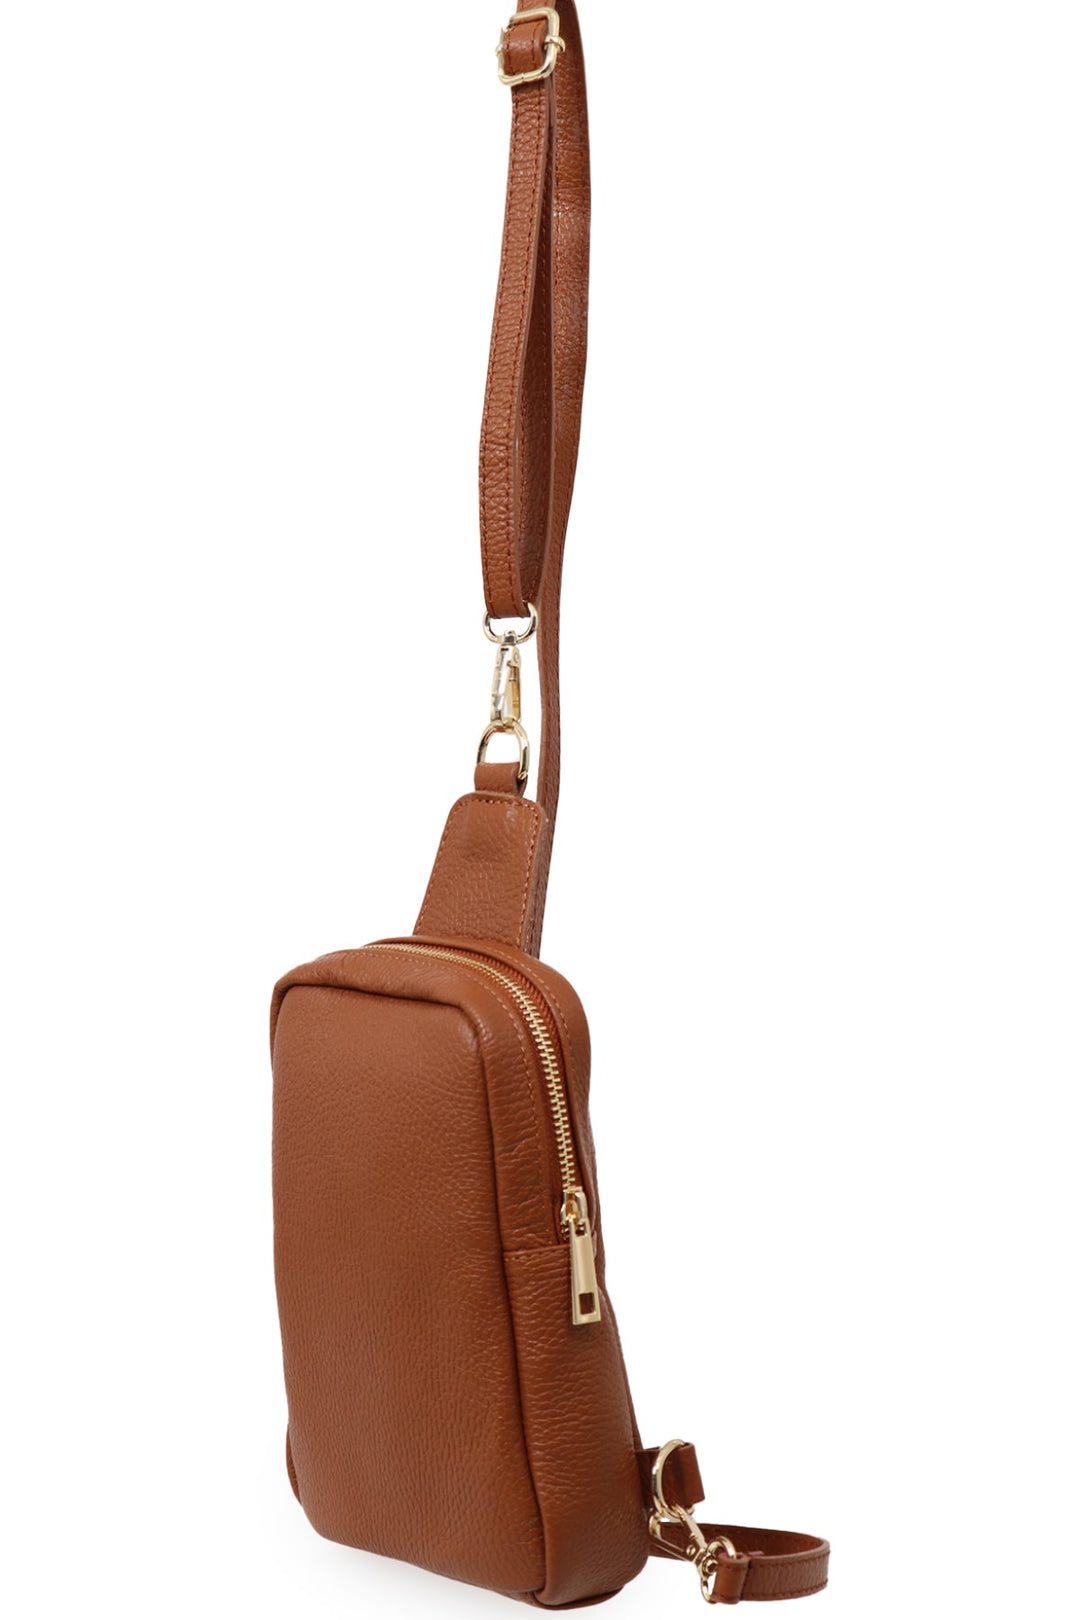 Tan Genuine Italian Leather Sling Bag